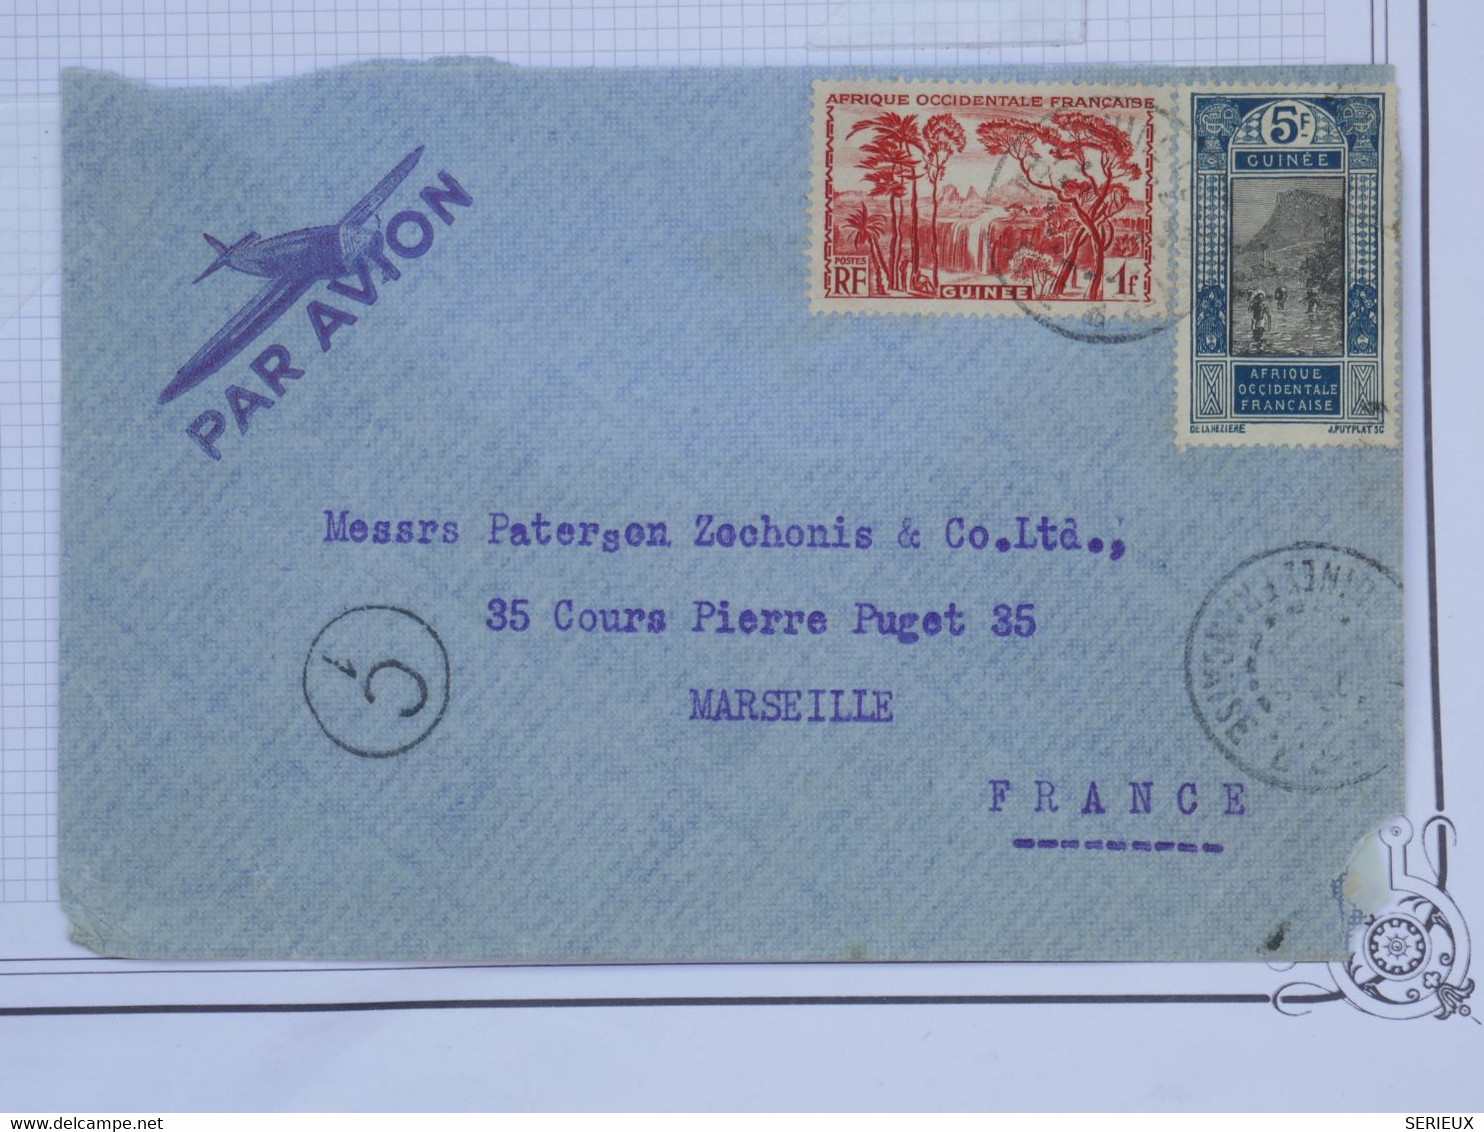 BF11 GUINEE BELLE LETTRE 1940 PAR AVION CONAKRY A MARSEILLE FRANCE + +AFFRANCH. INTERESSANT - Covers & Documents